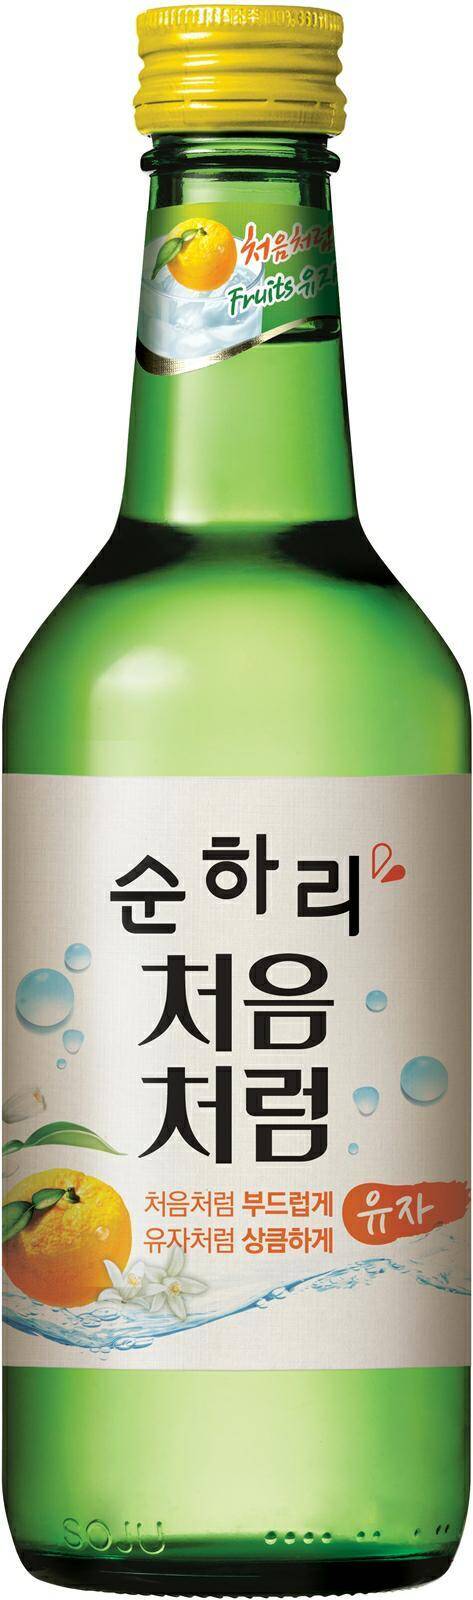 LOTTE Soju Chum Churum Yuzu (12%alk) 350 ml 